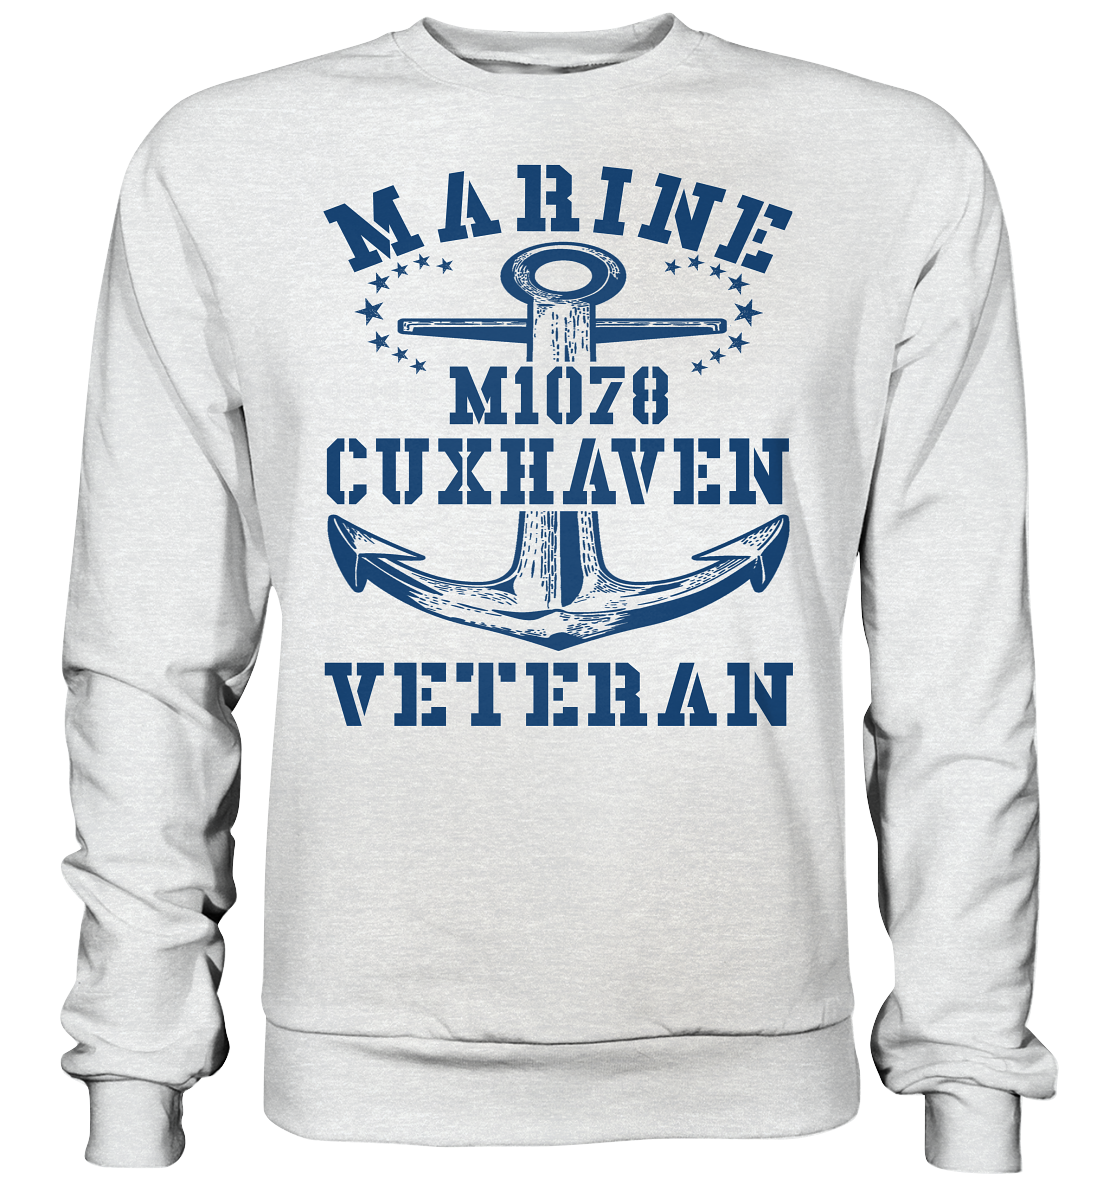 MARINE VETERAN M1078 CUXHAVEN - Premium Sweatshirt